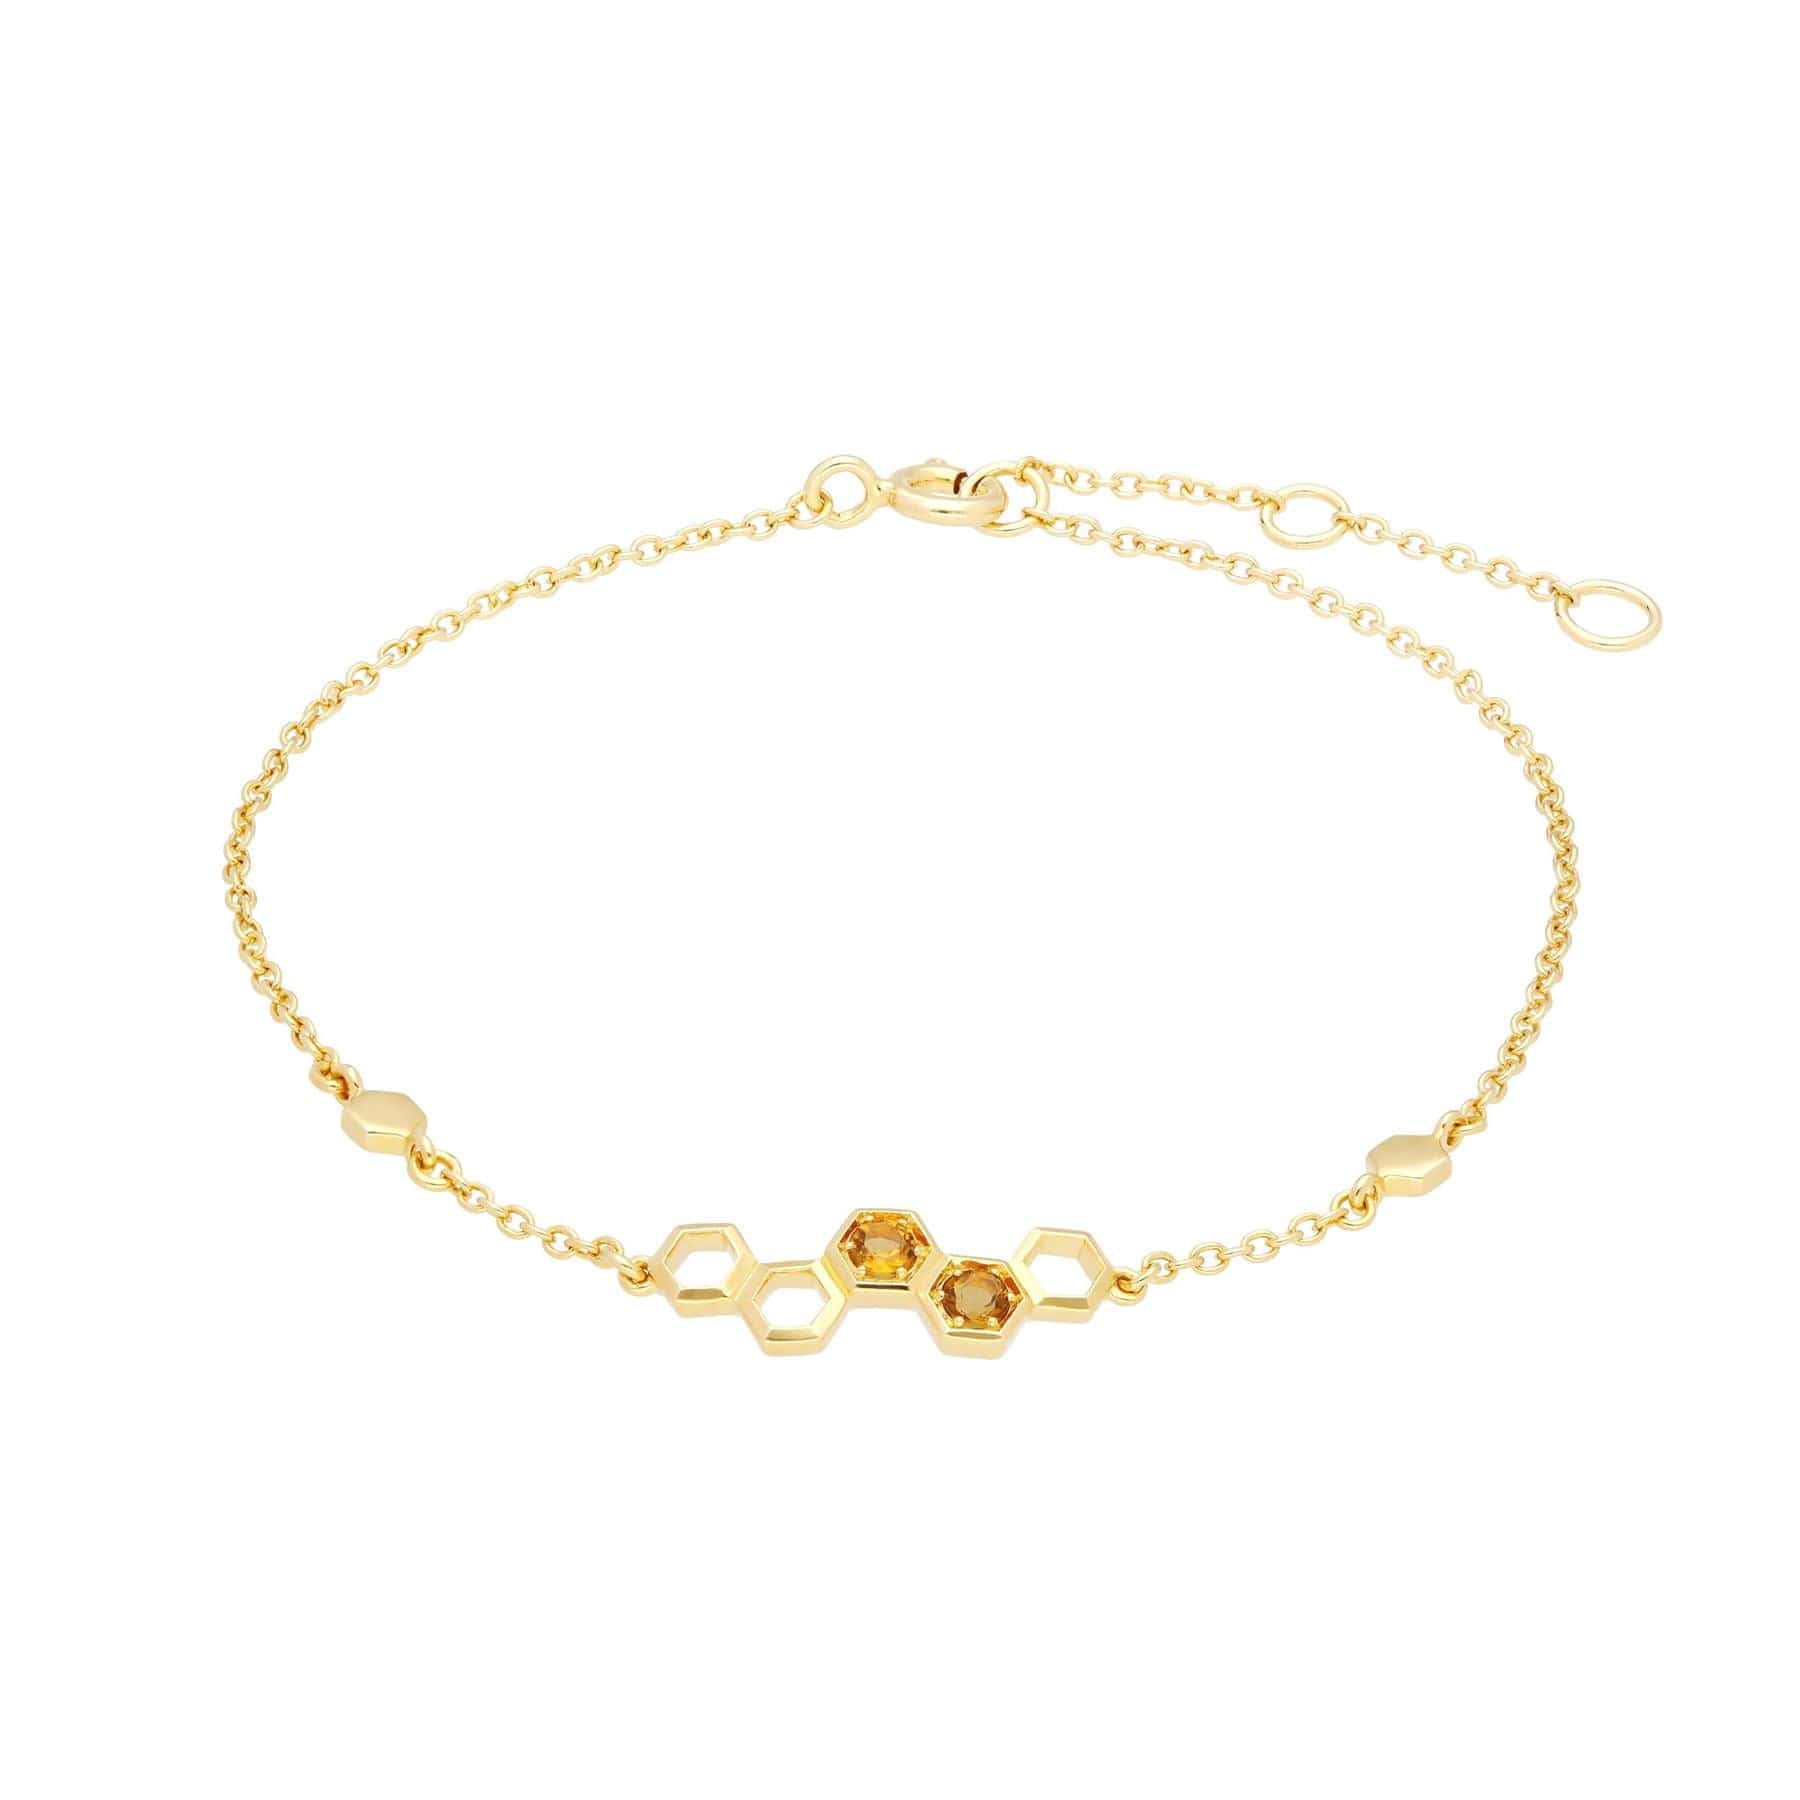 Honeycomb Inspired Citrine Link Bracelet in 9ct Yellow Gold - Gemondo